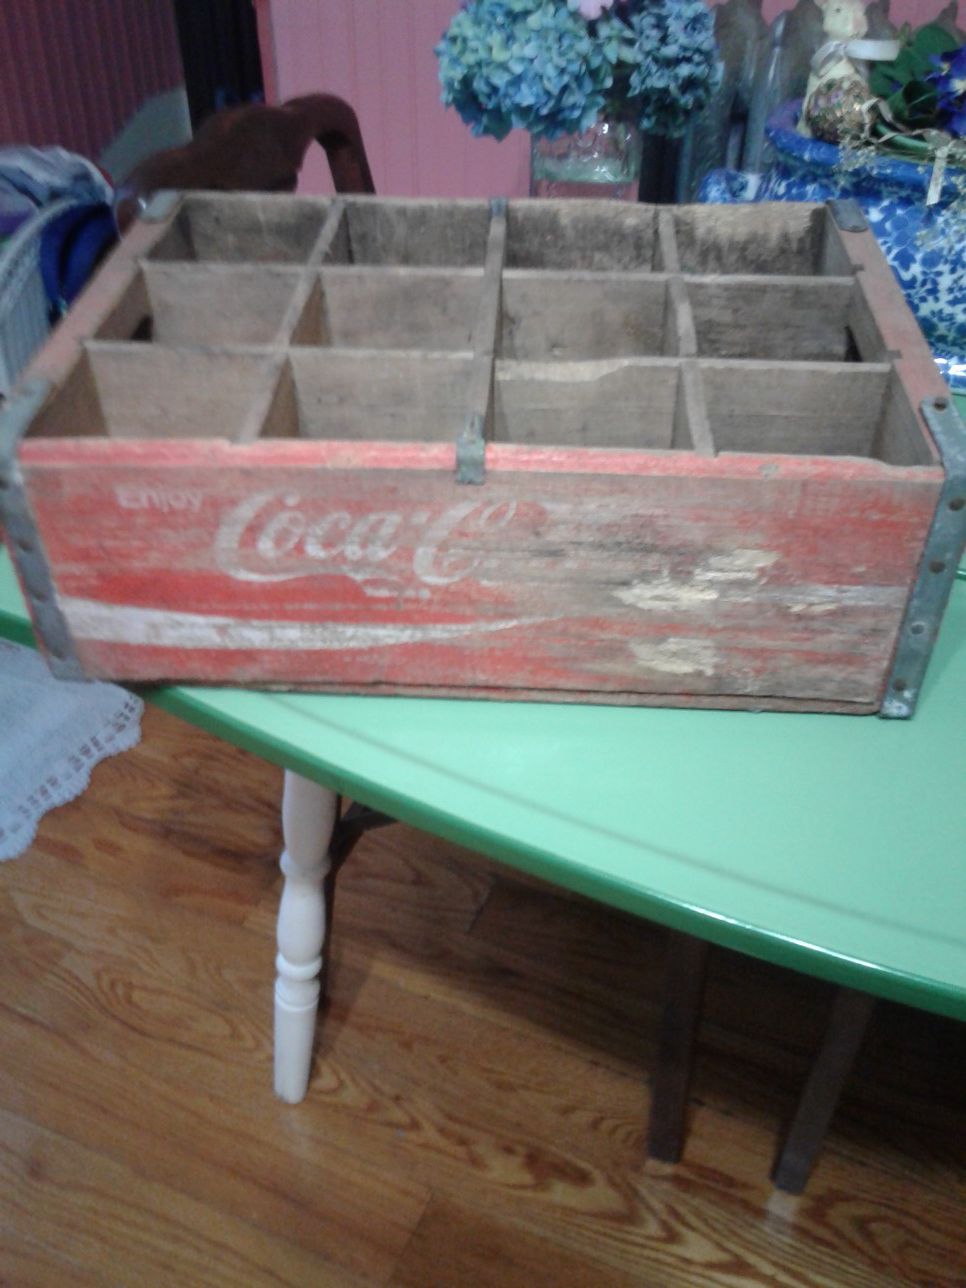 Coca cola wooden boxes